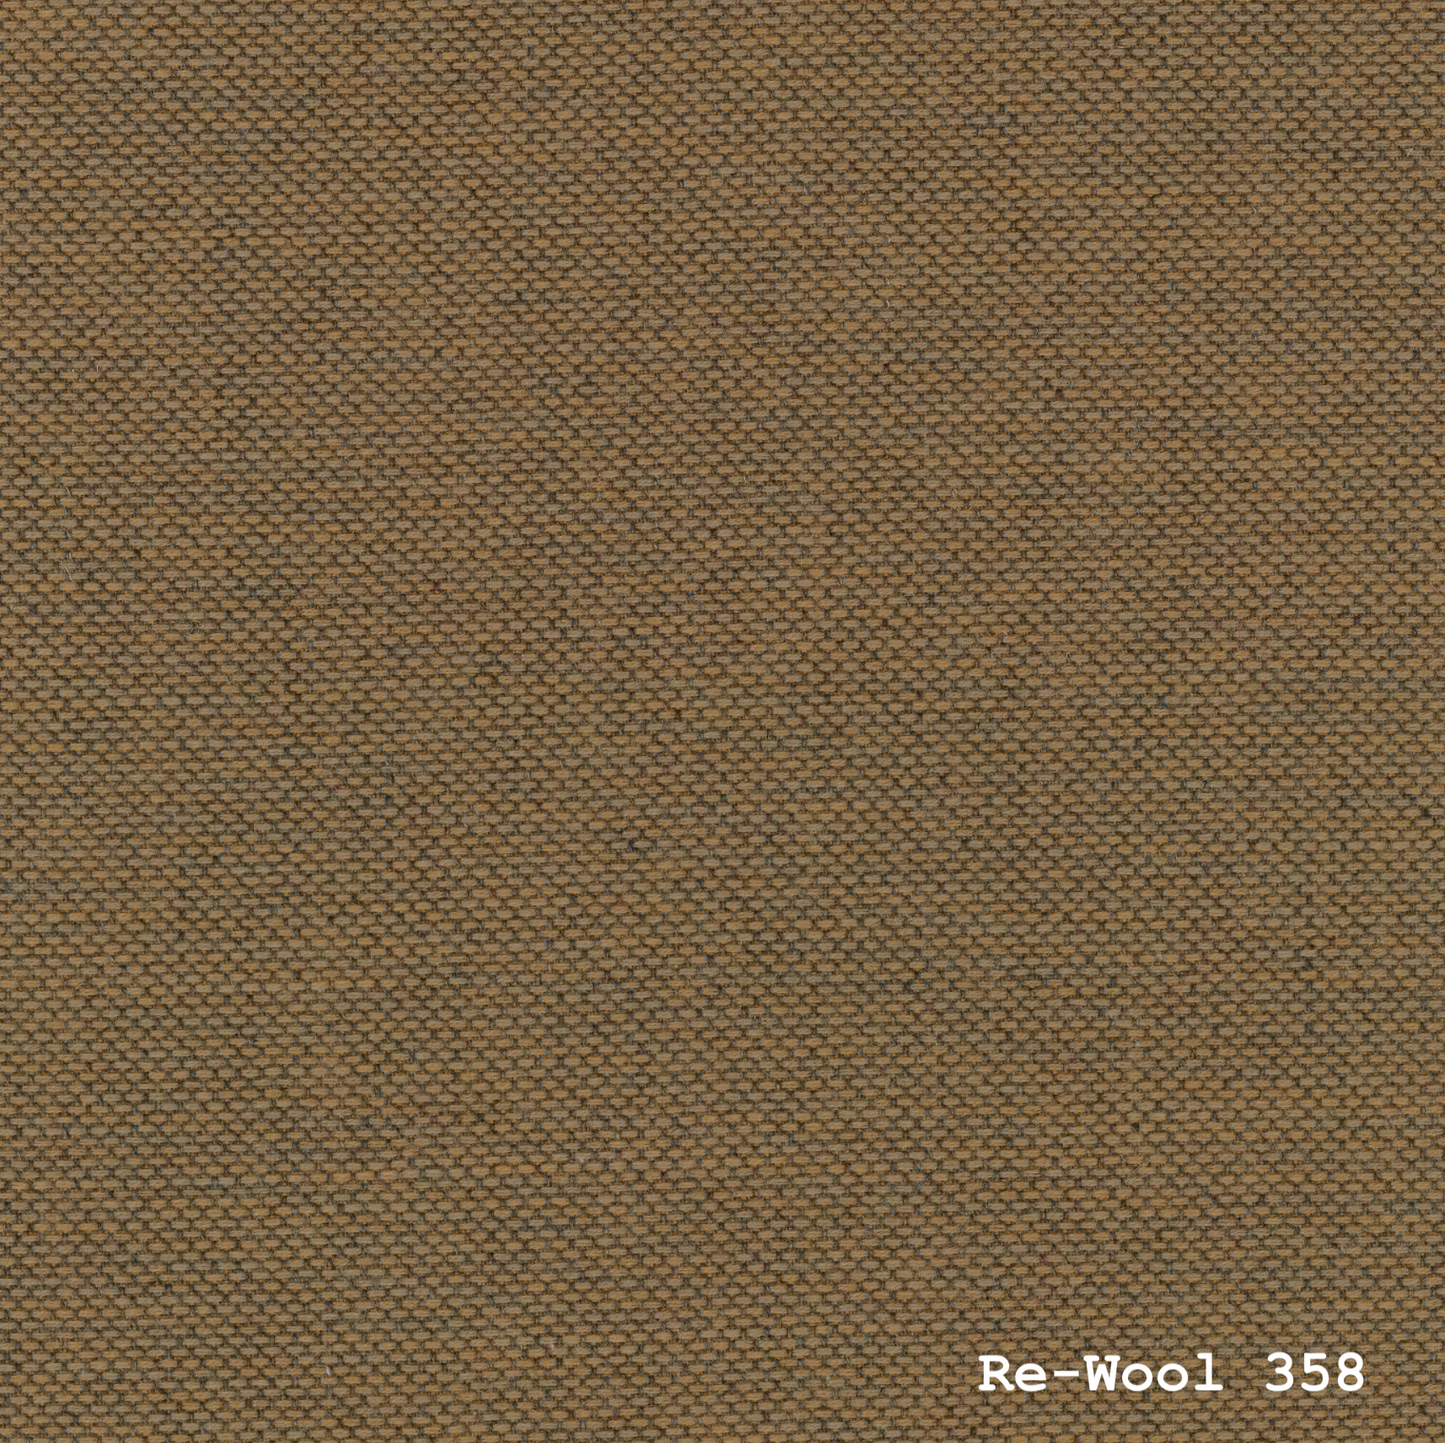 Buy Re-wool fabric from Kvadrat